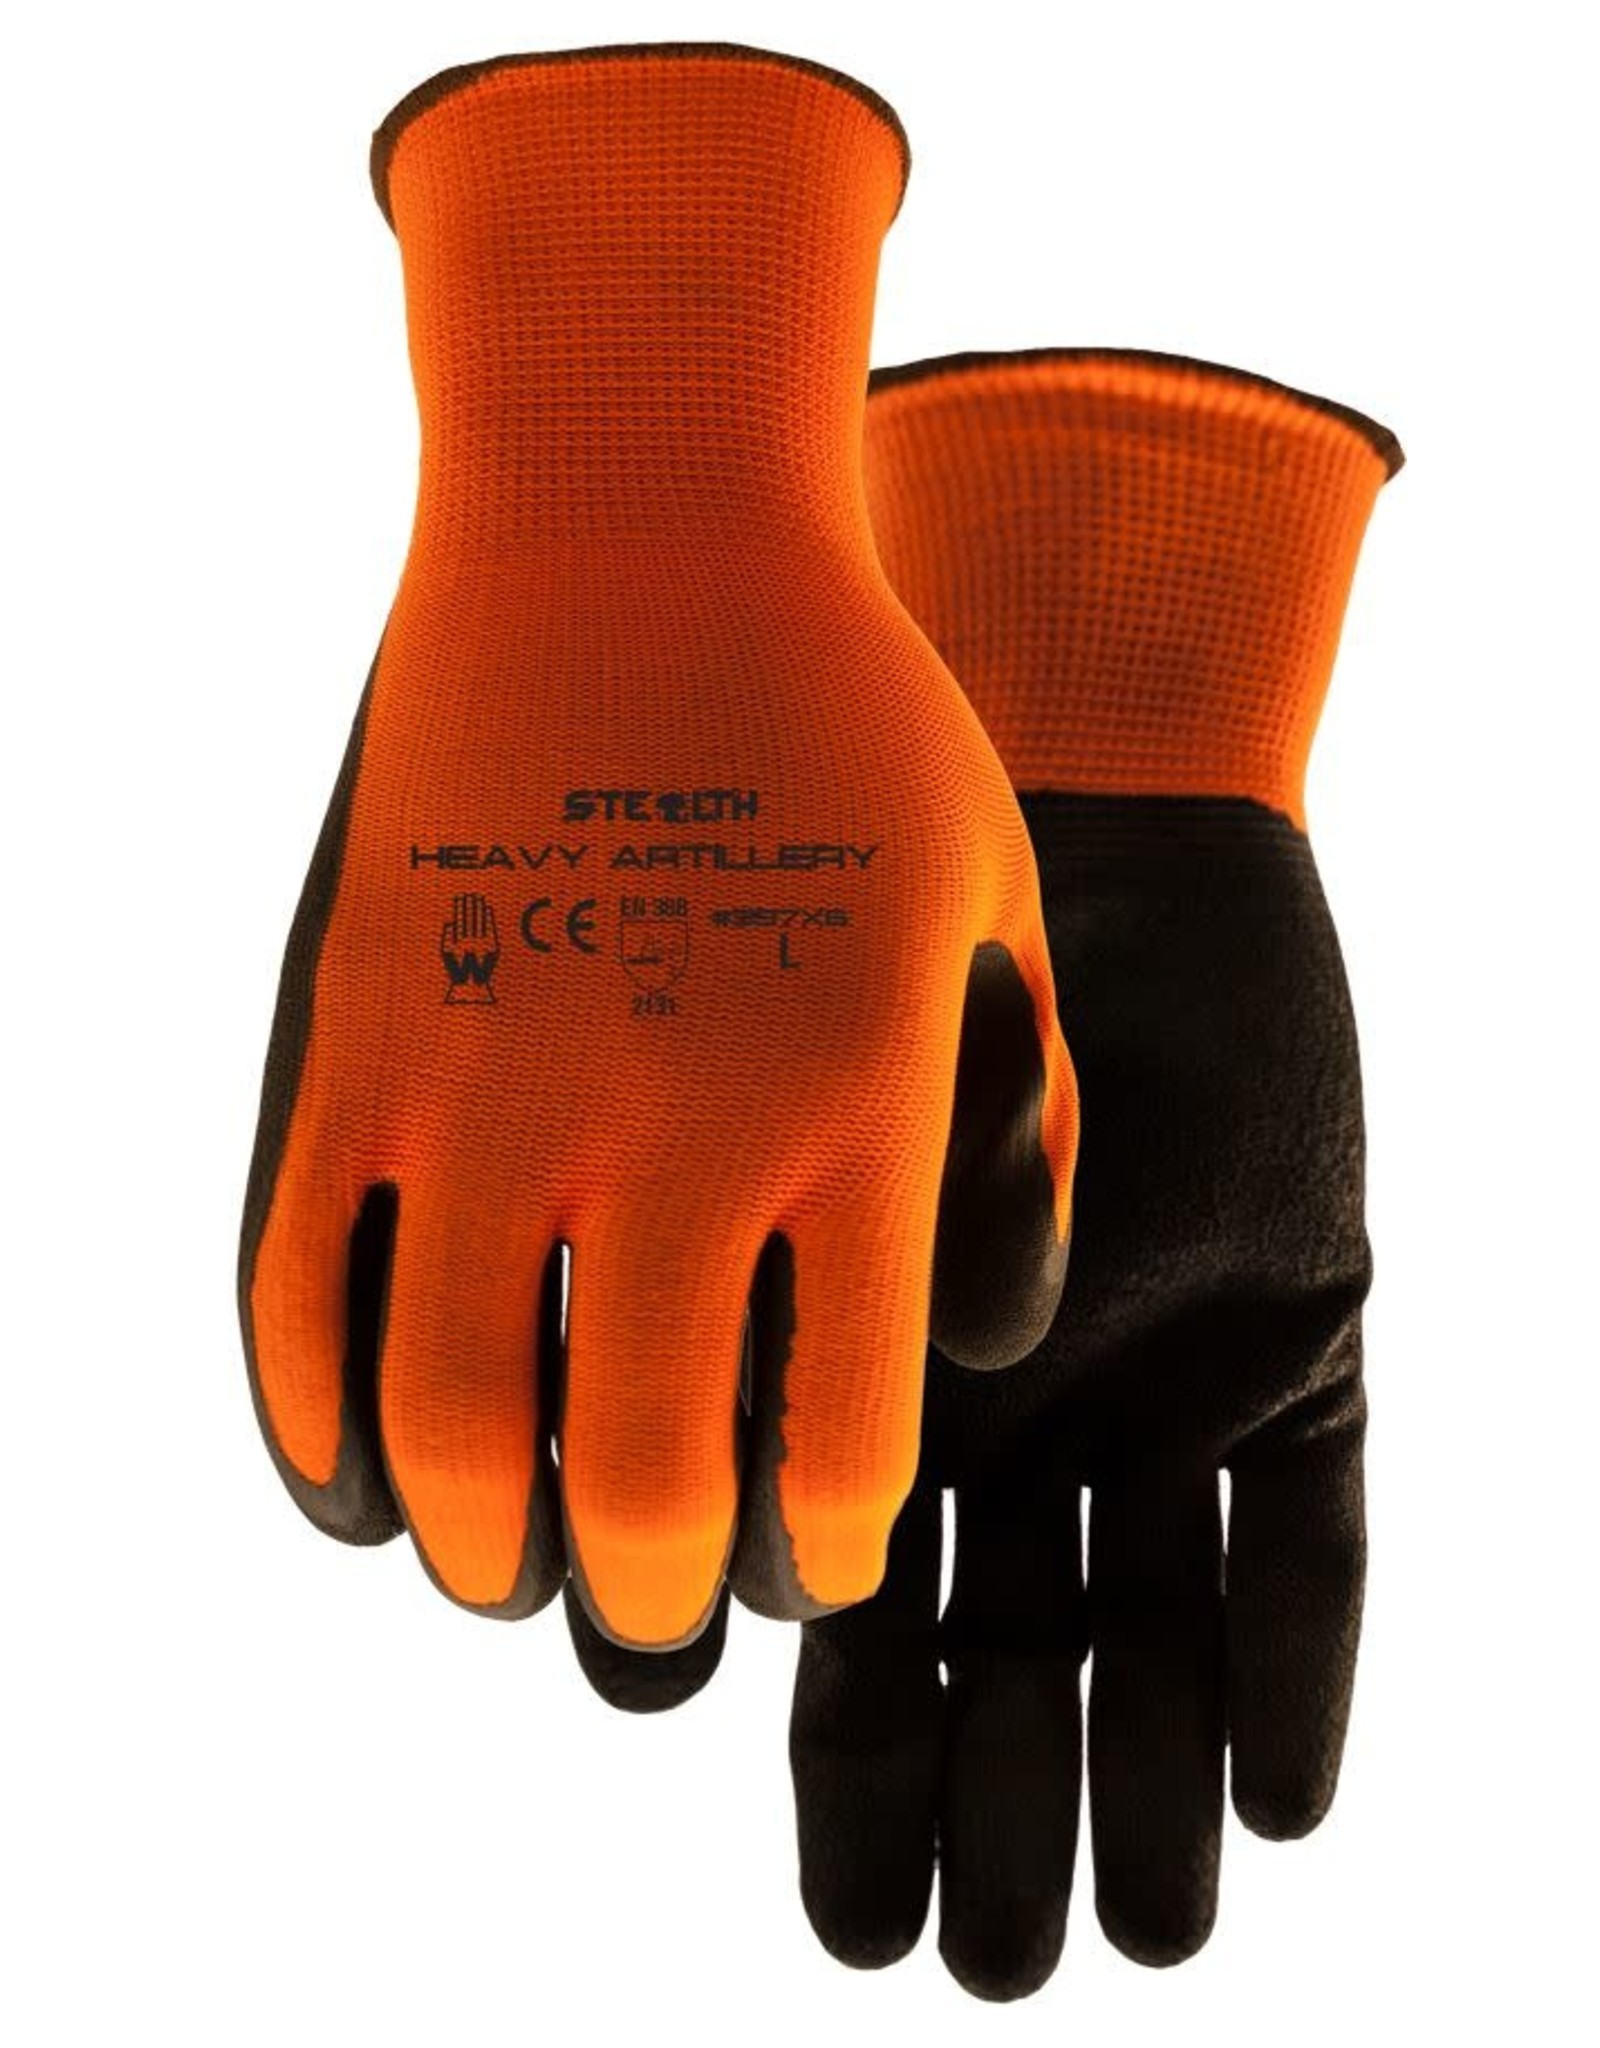 Watson Stealth Heavy Artillery Rubber Coated Gloves - Bulk Pack